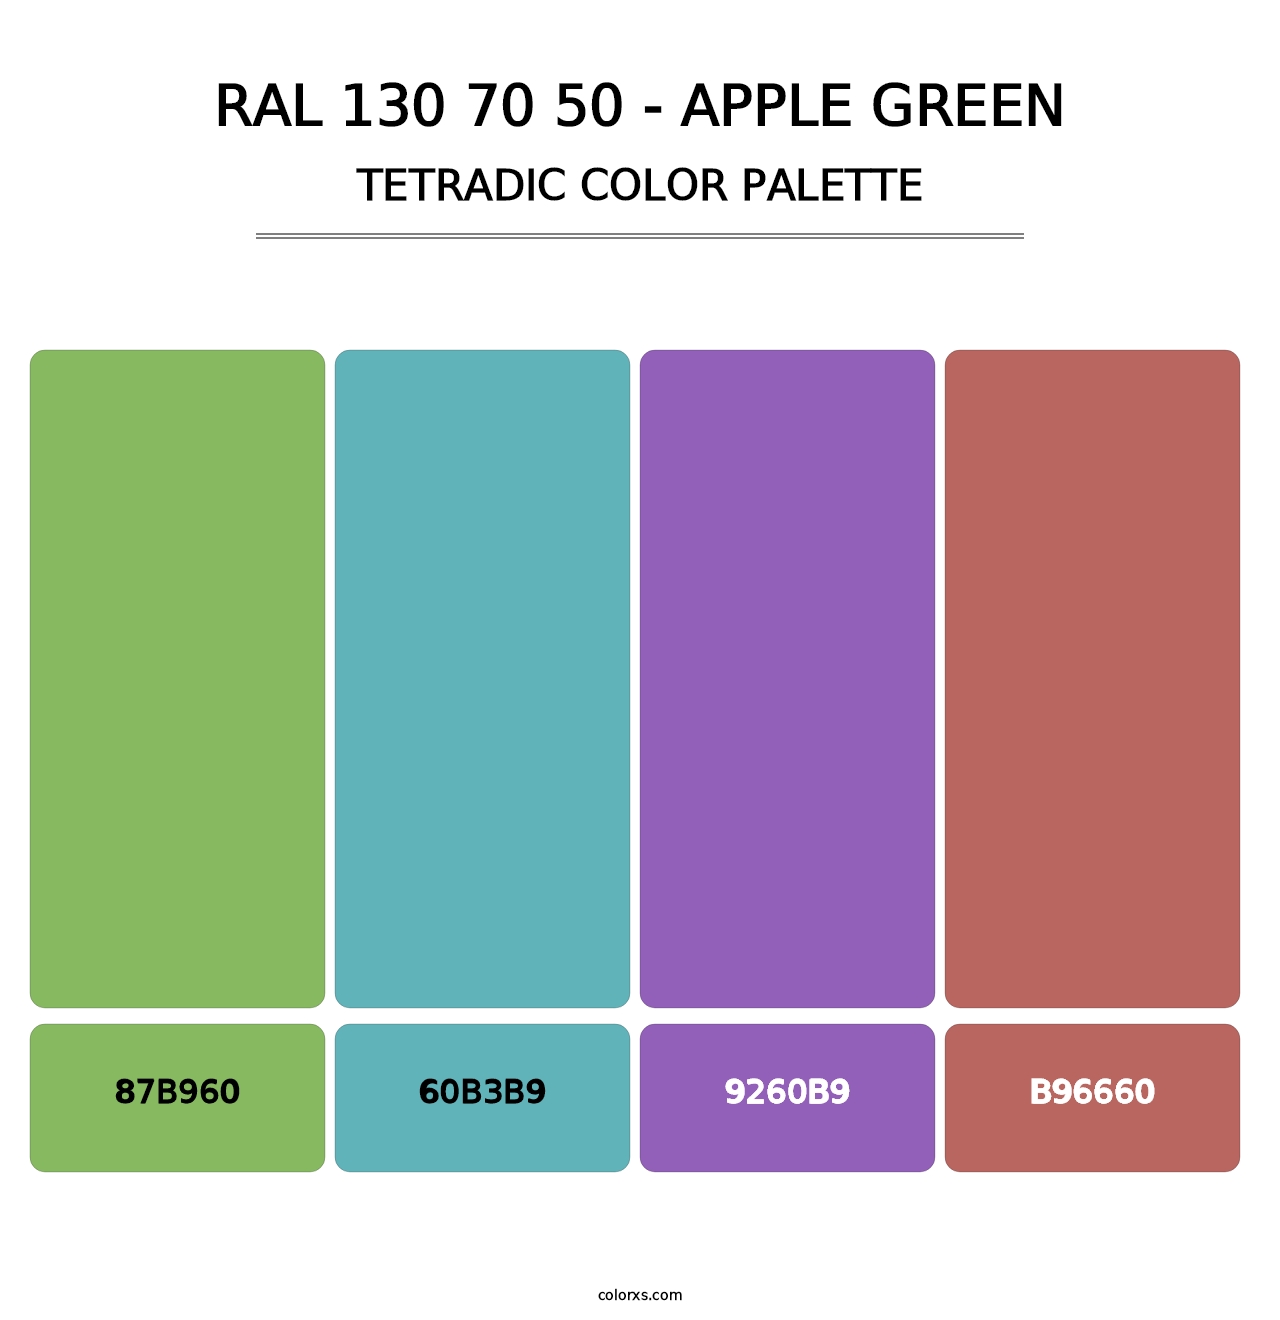 RAL 130 70 50 - Apple Green - Tetradic Color Palette